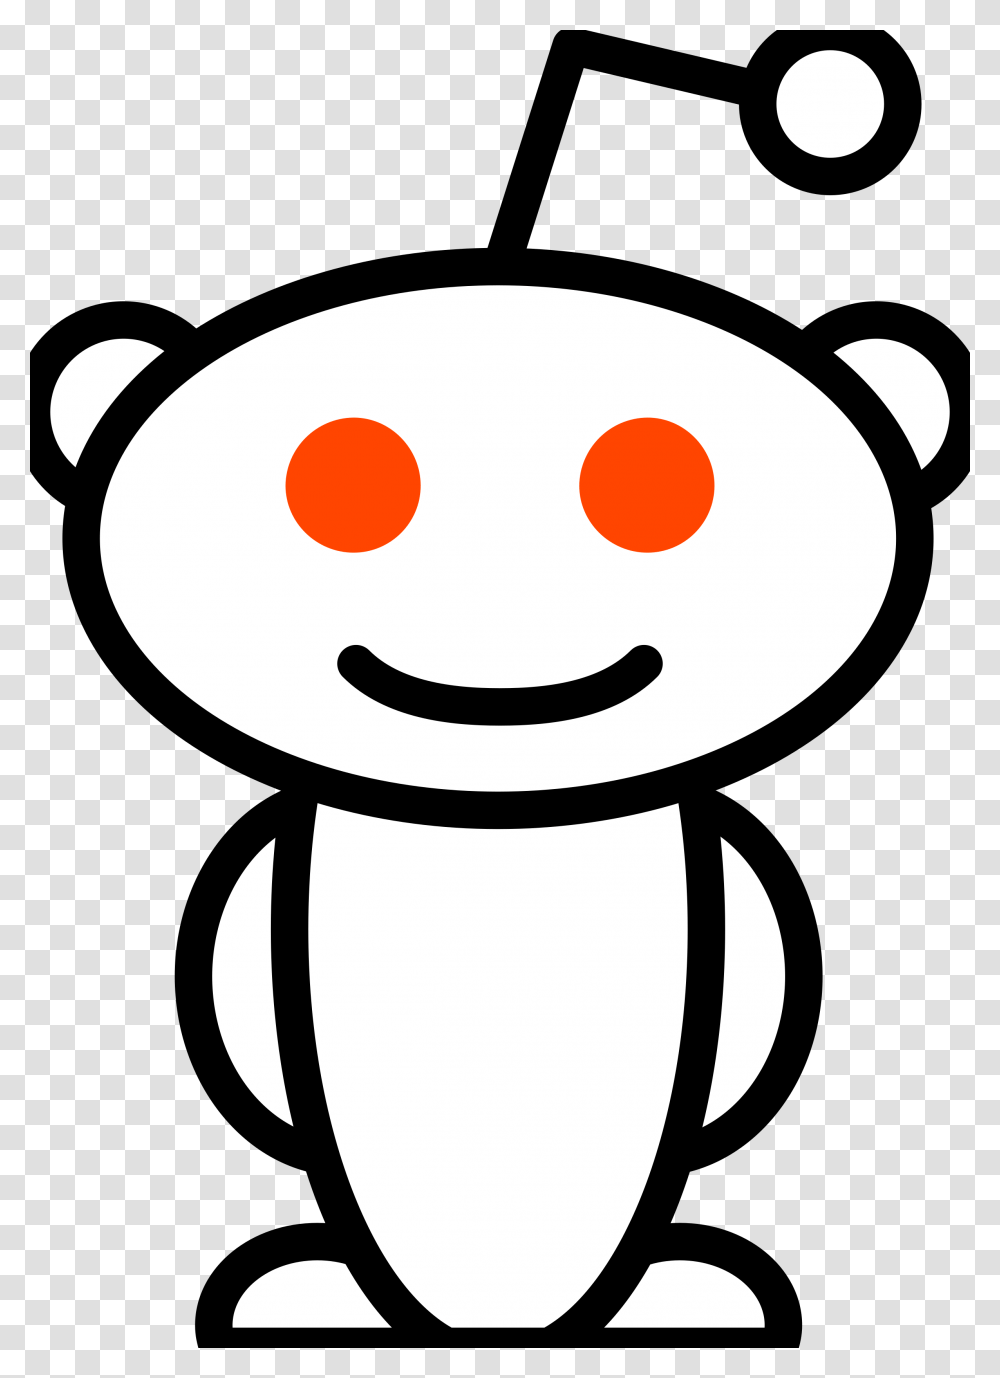 Reddit Alien Logo Vector, Outdoors, Silhouette, Animal, Toad Transparent Png